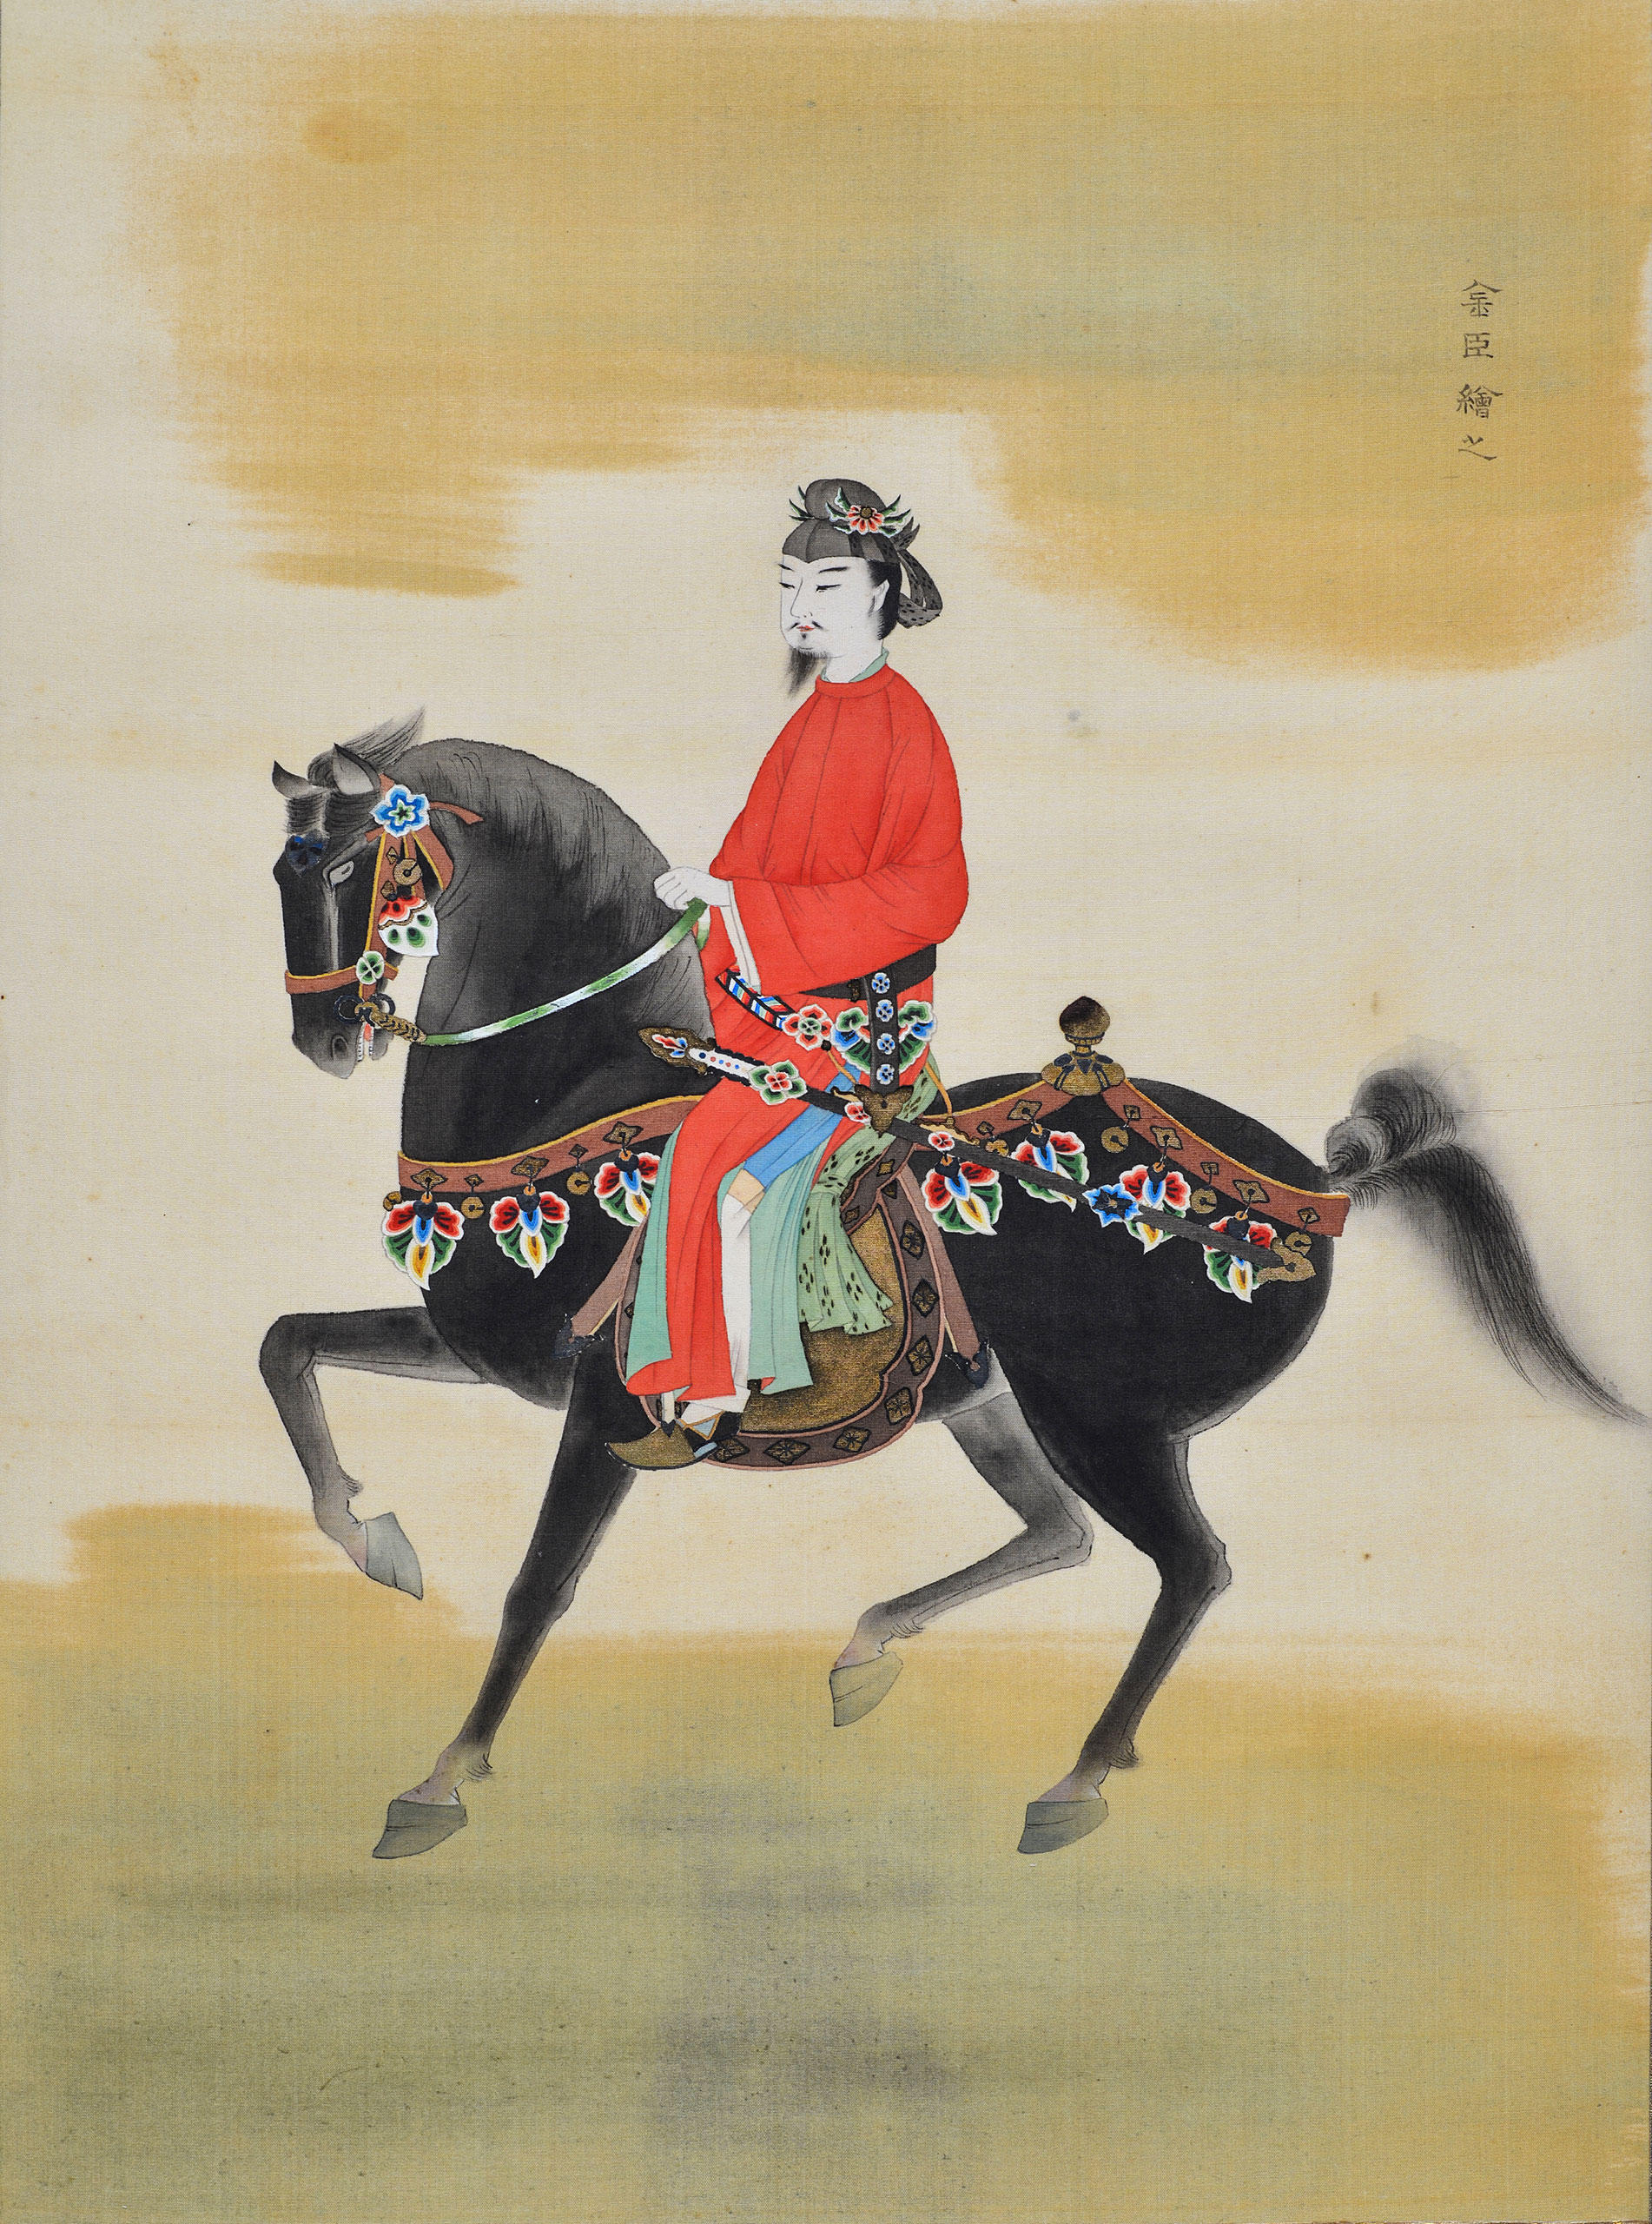 馬上太子圖* - Shotoku Taishi on Horseback